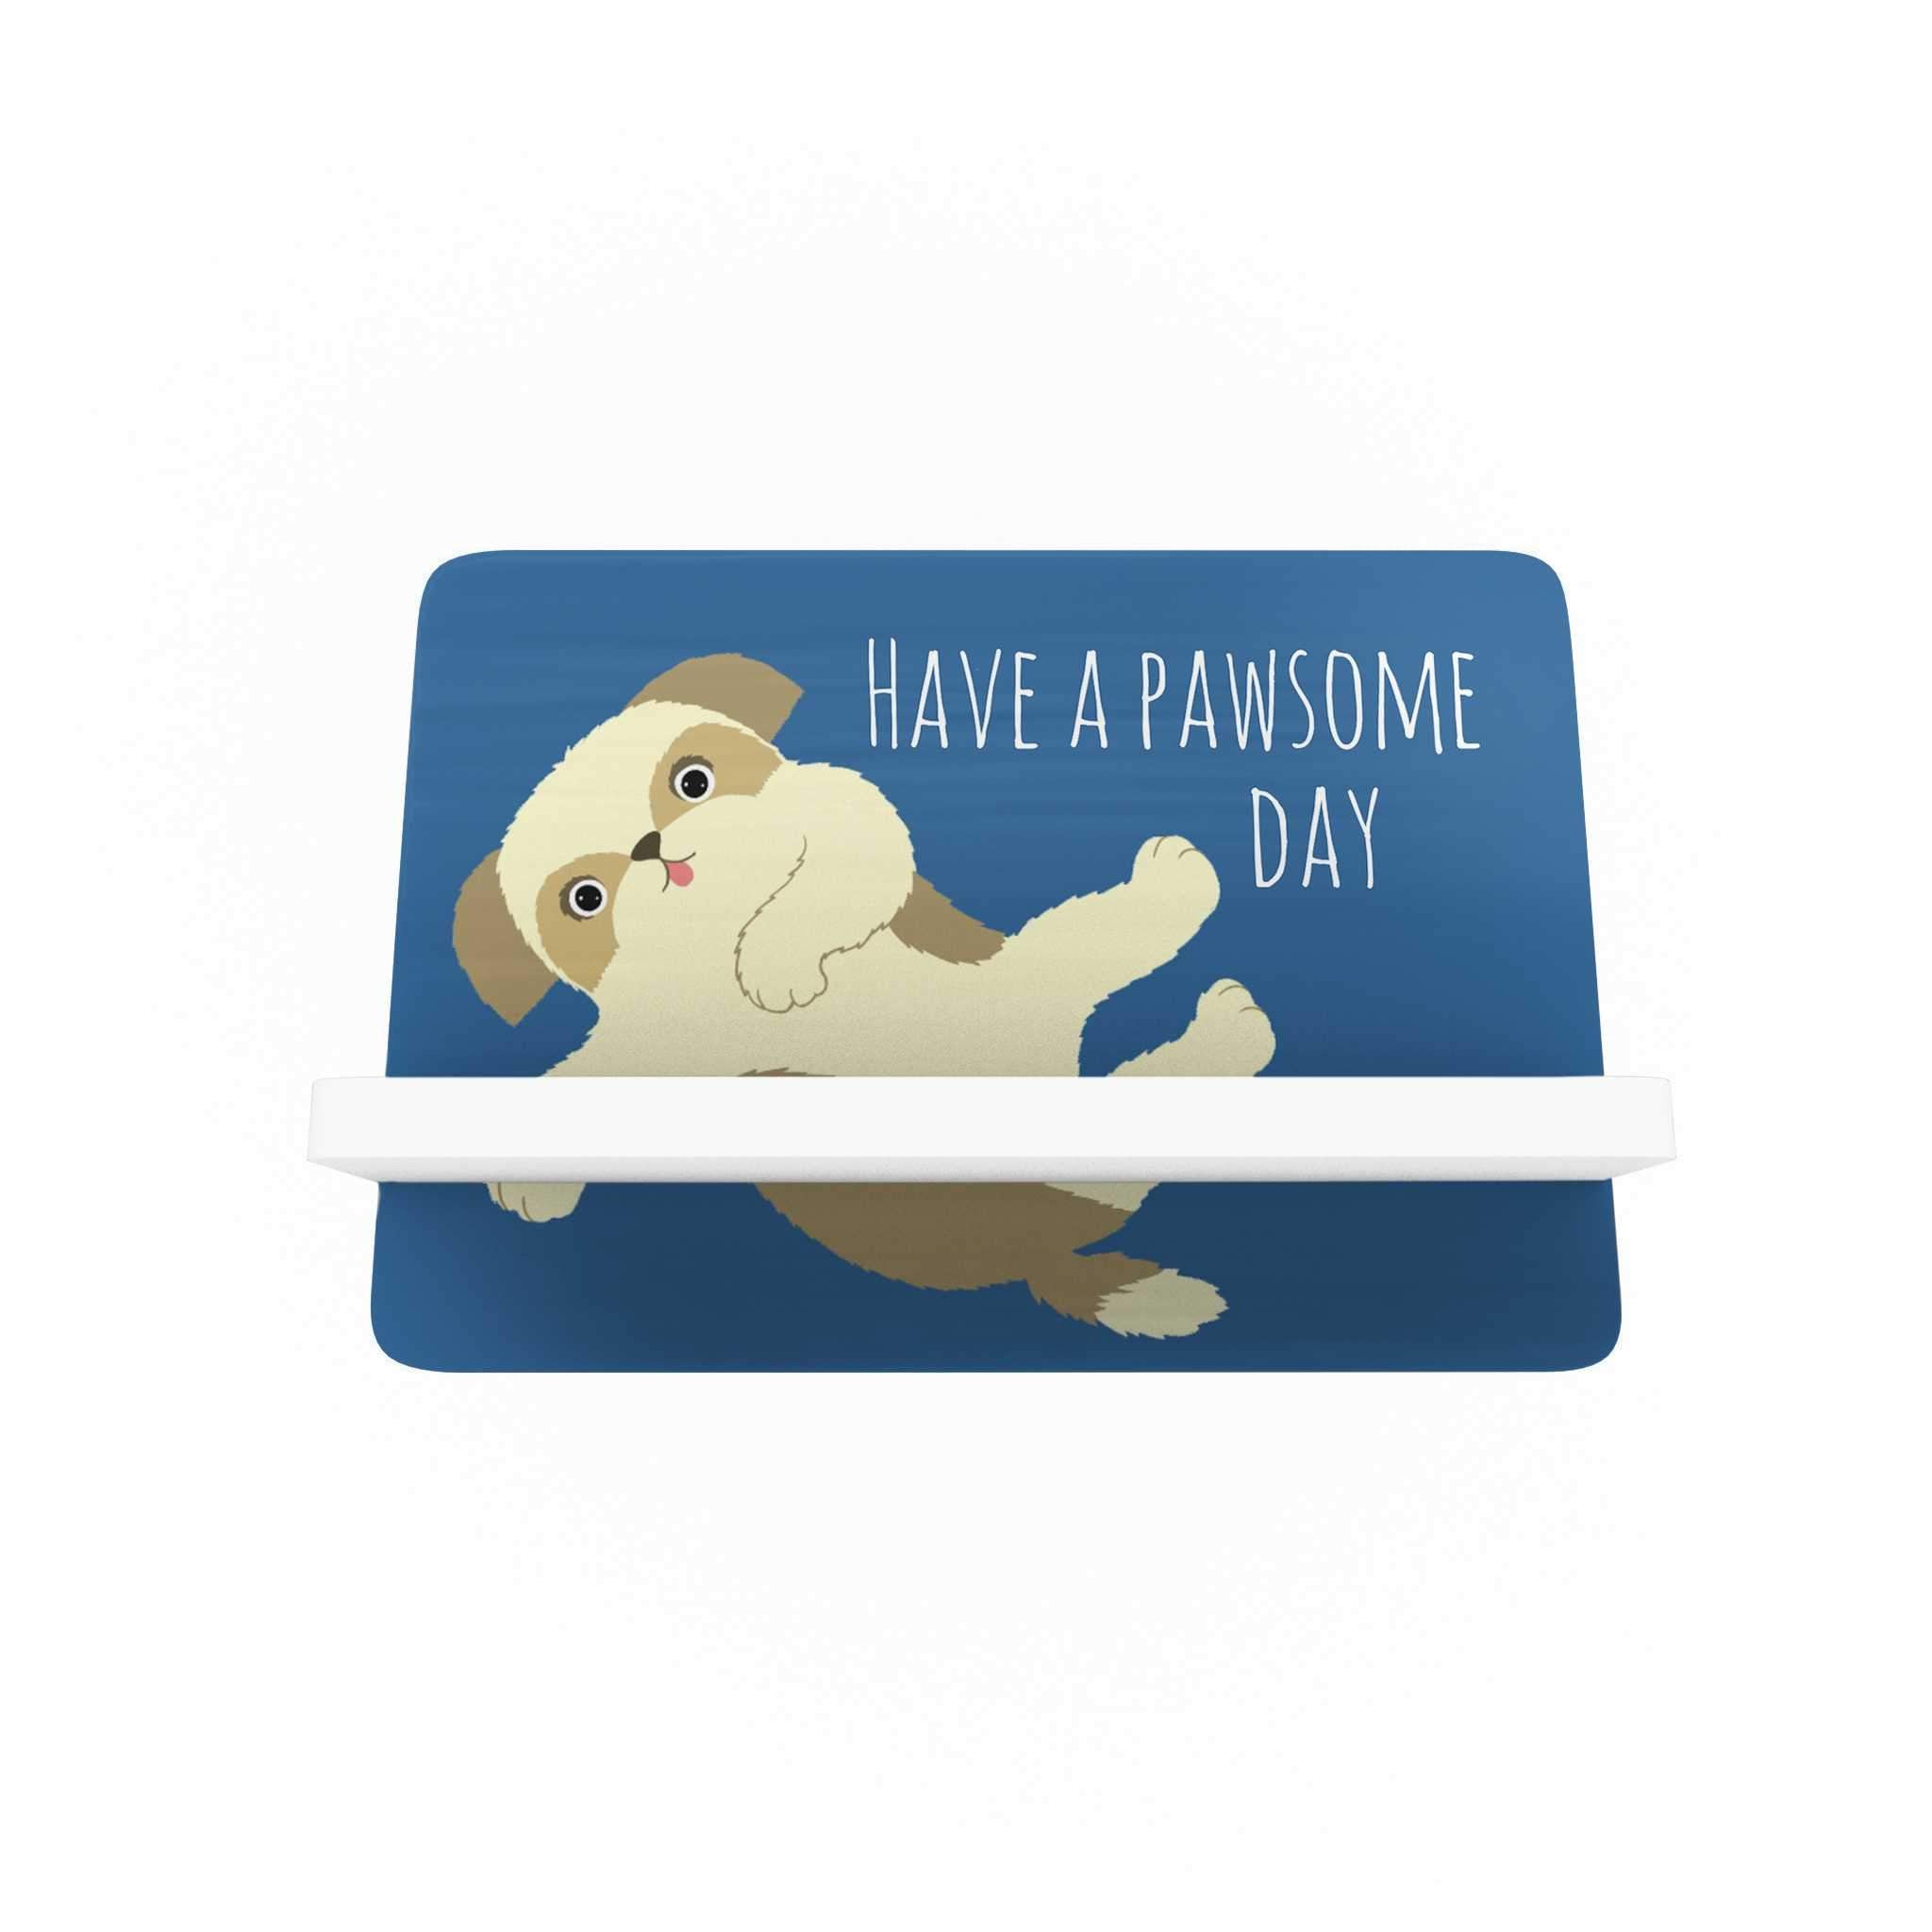 Pawsome: Have a Pawsome Day Cellphone Holder